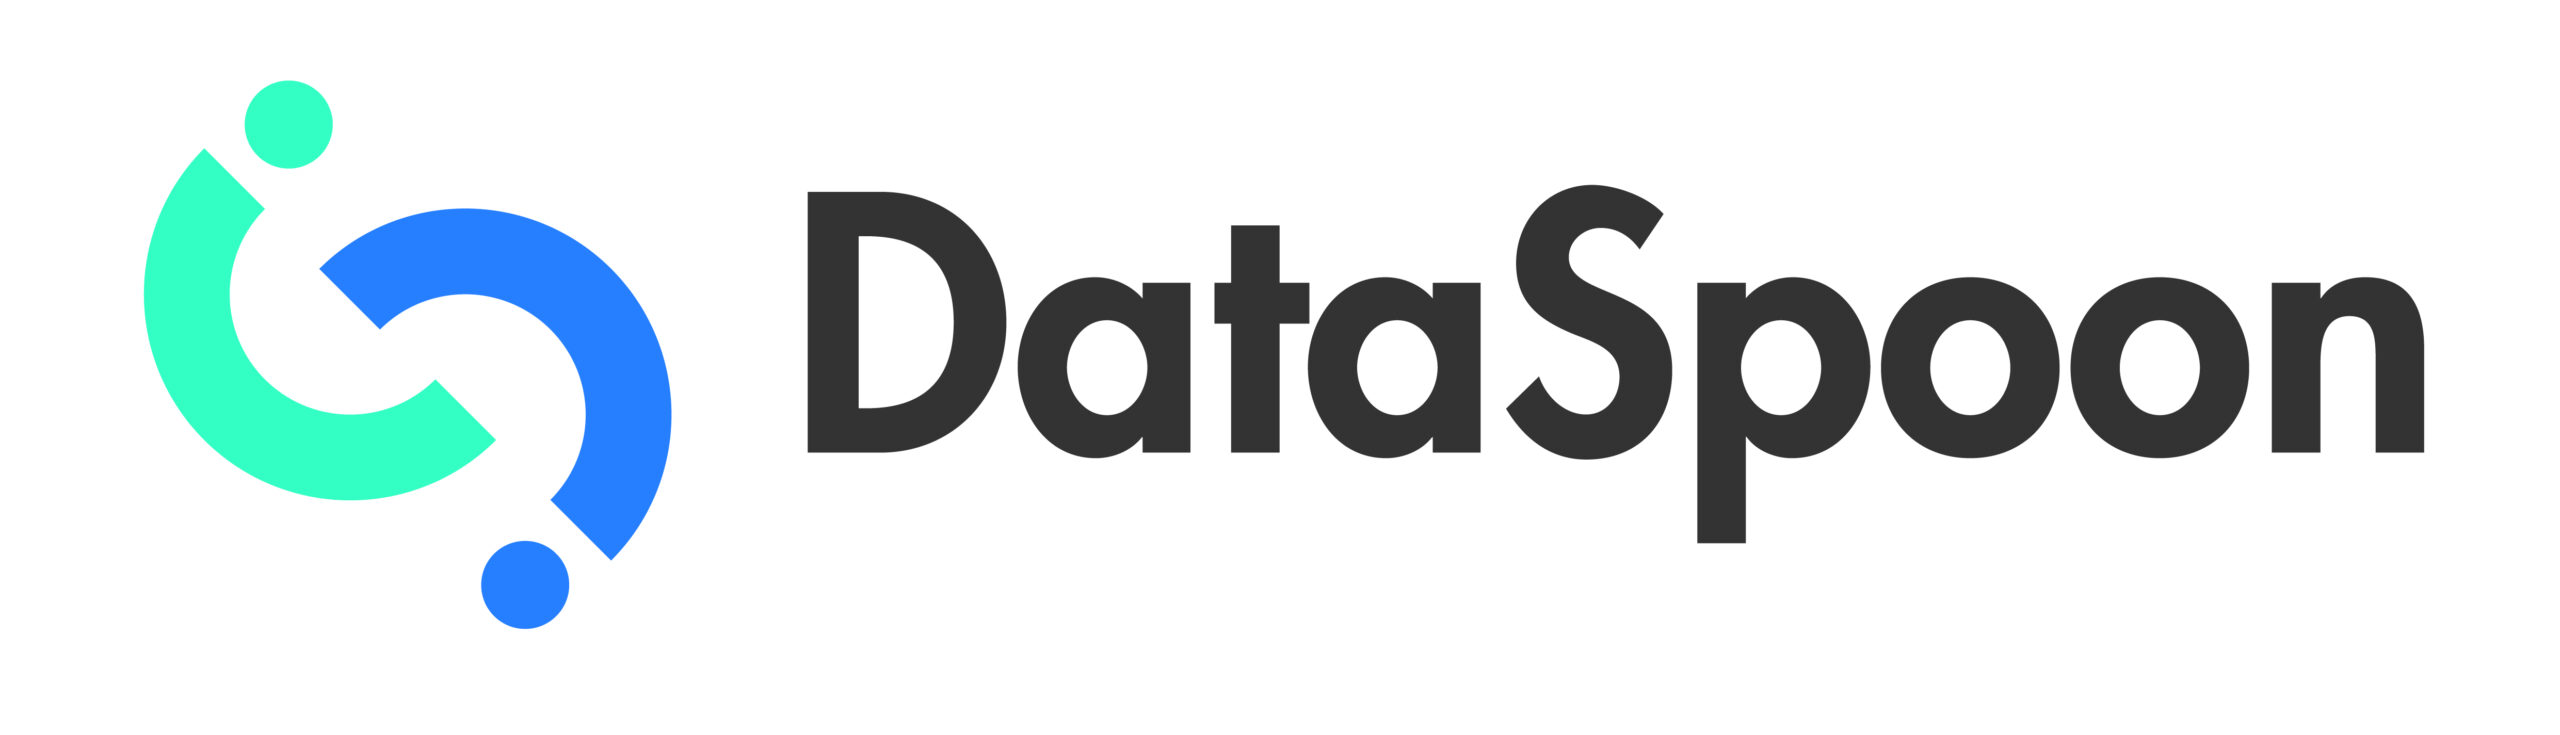 dataspoon